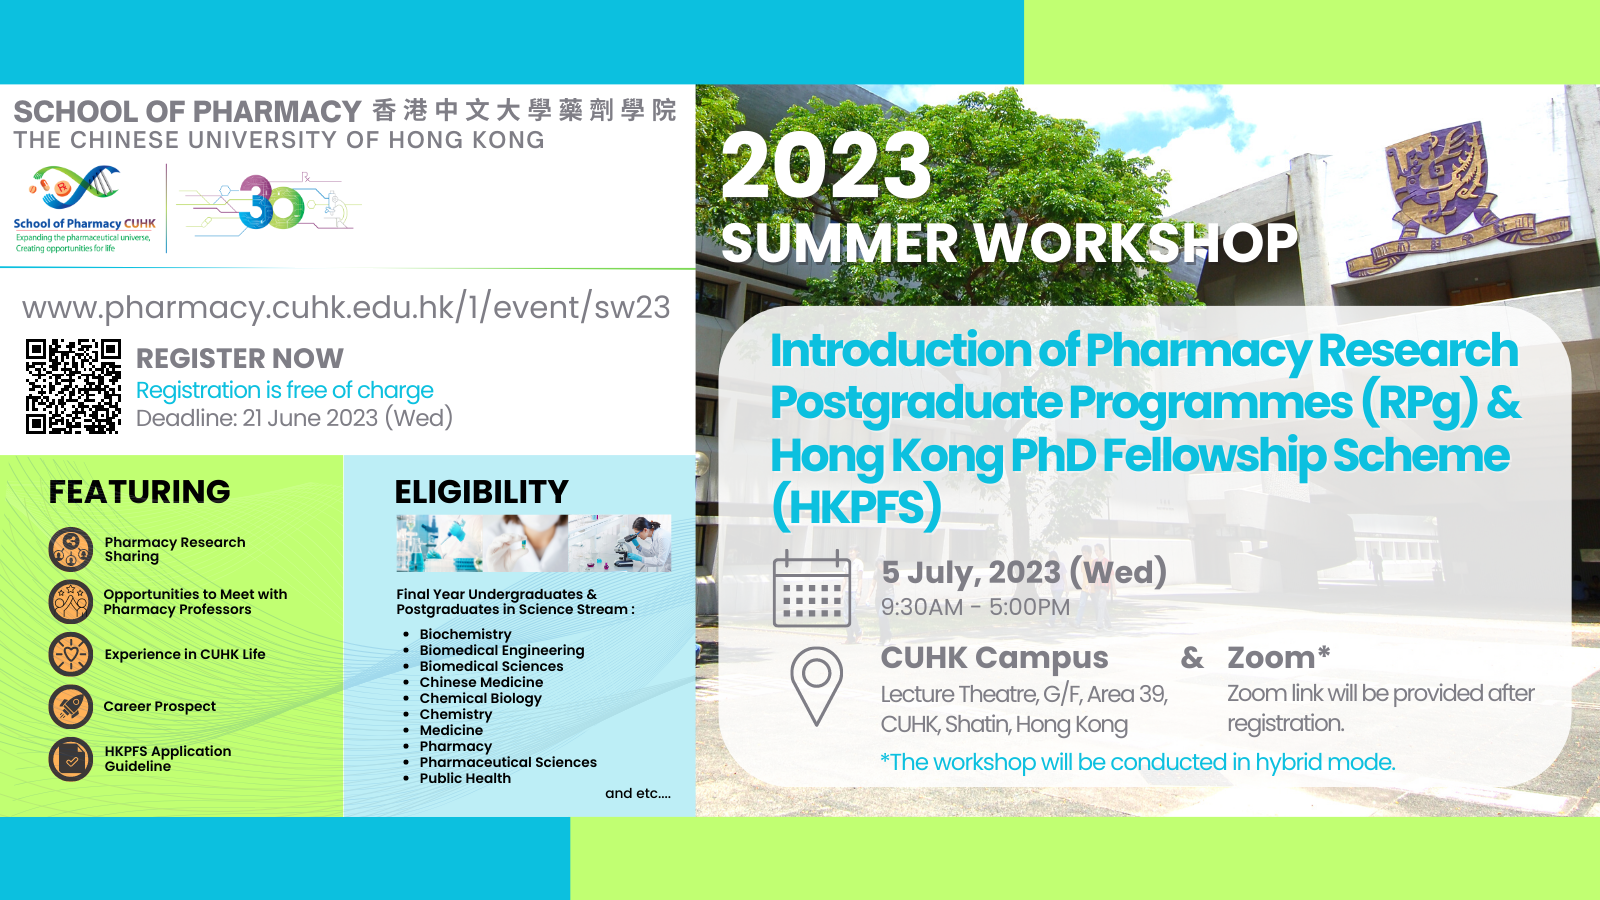 Summer Workshop on Introduction of Pharmacy Research Postgraduate Programmes (RPg)  & Hong Kong PhD Fellowship Scheme (HKPFS) Scheme 2023 @ CUHK Campus